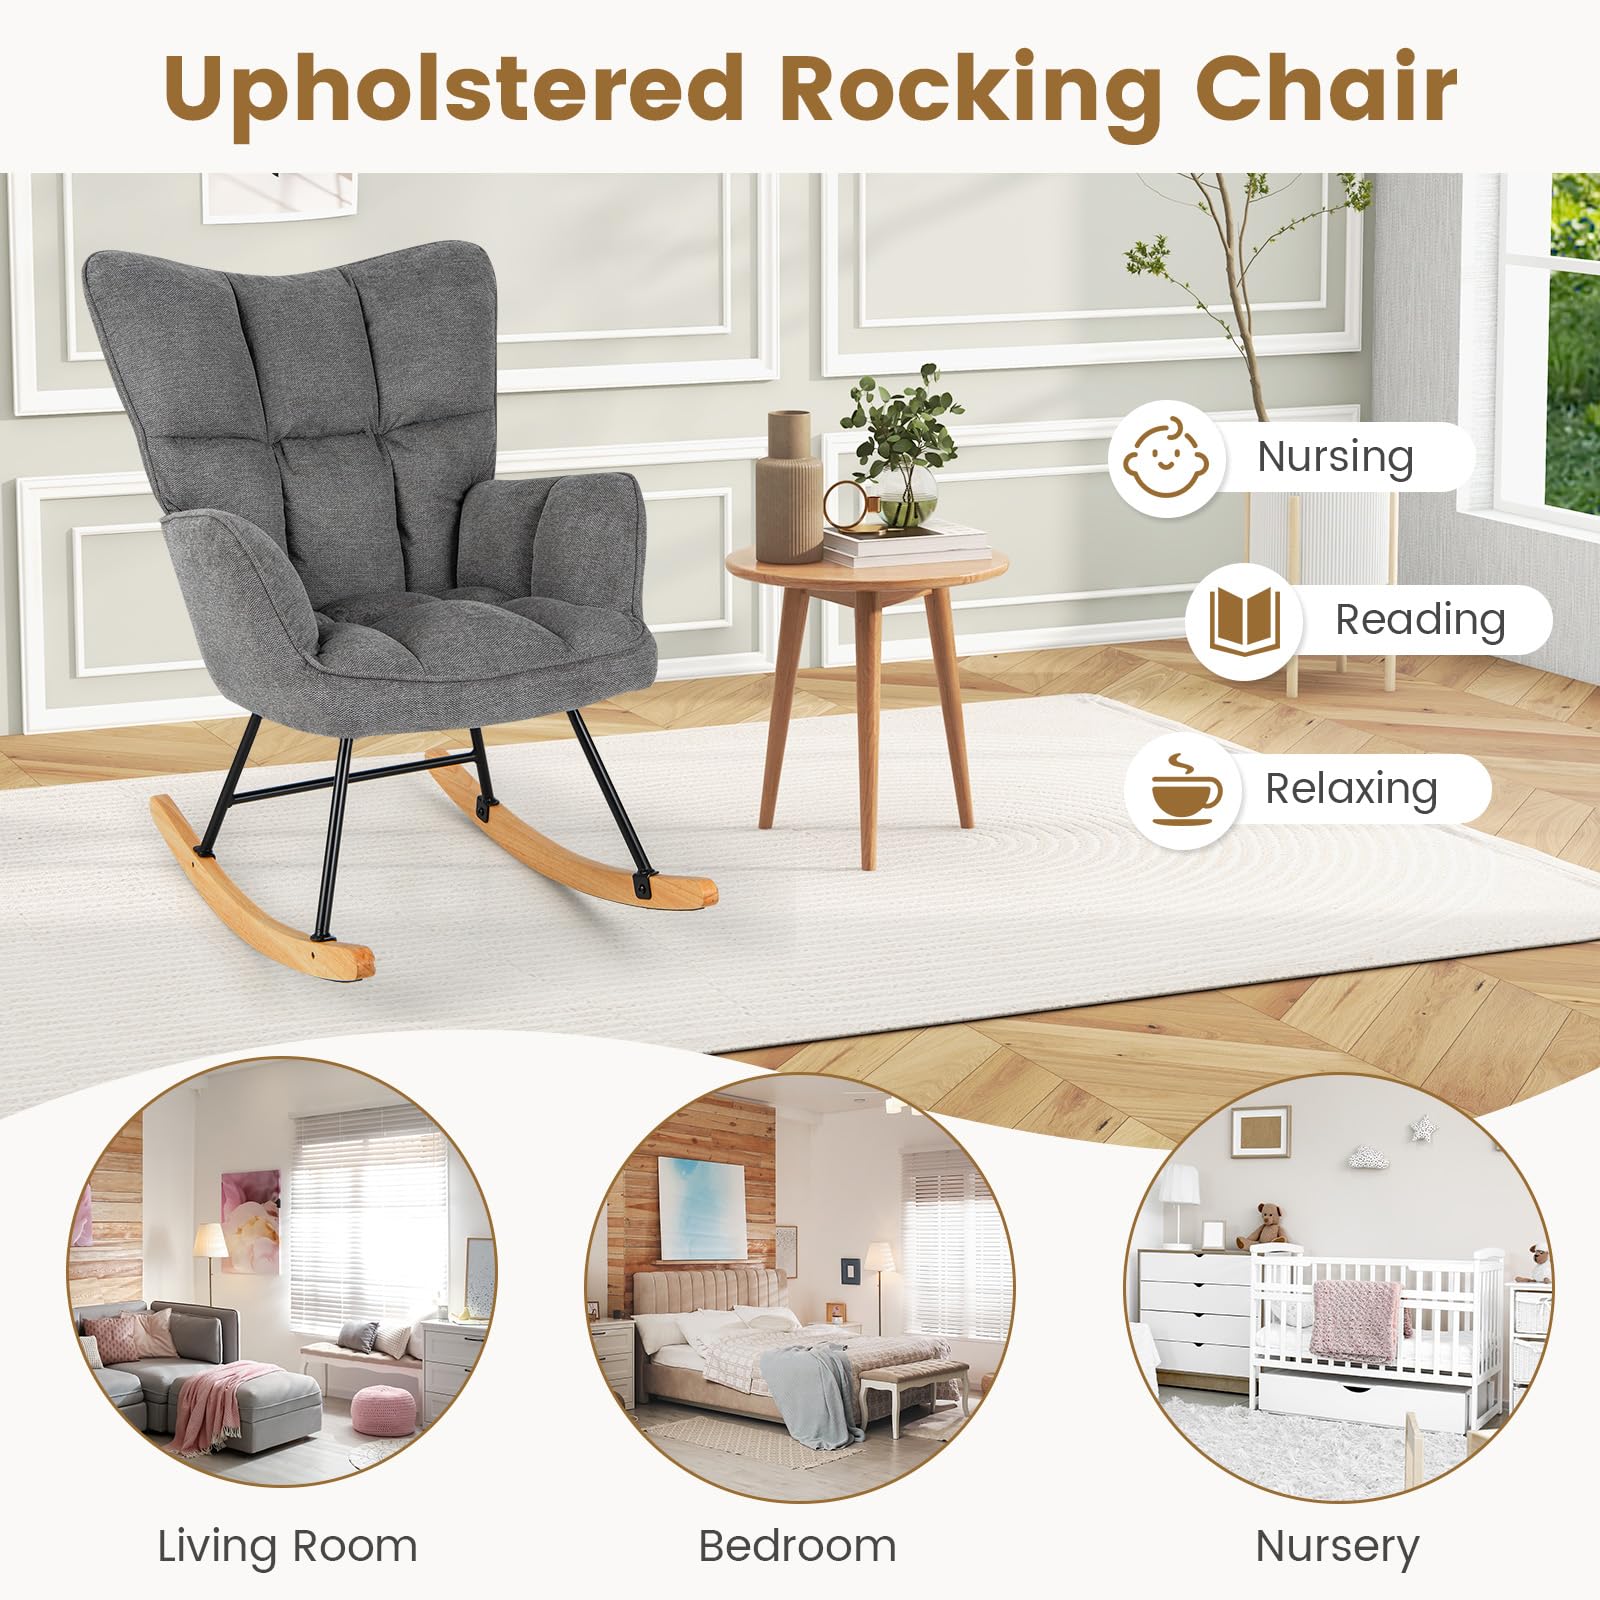 Giantex Rocking Chair Nursery, Modern Rocking Accent Chair w/High Backrest